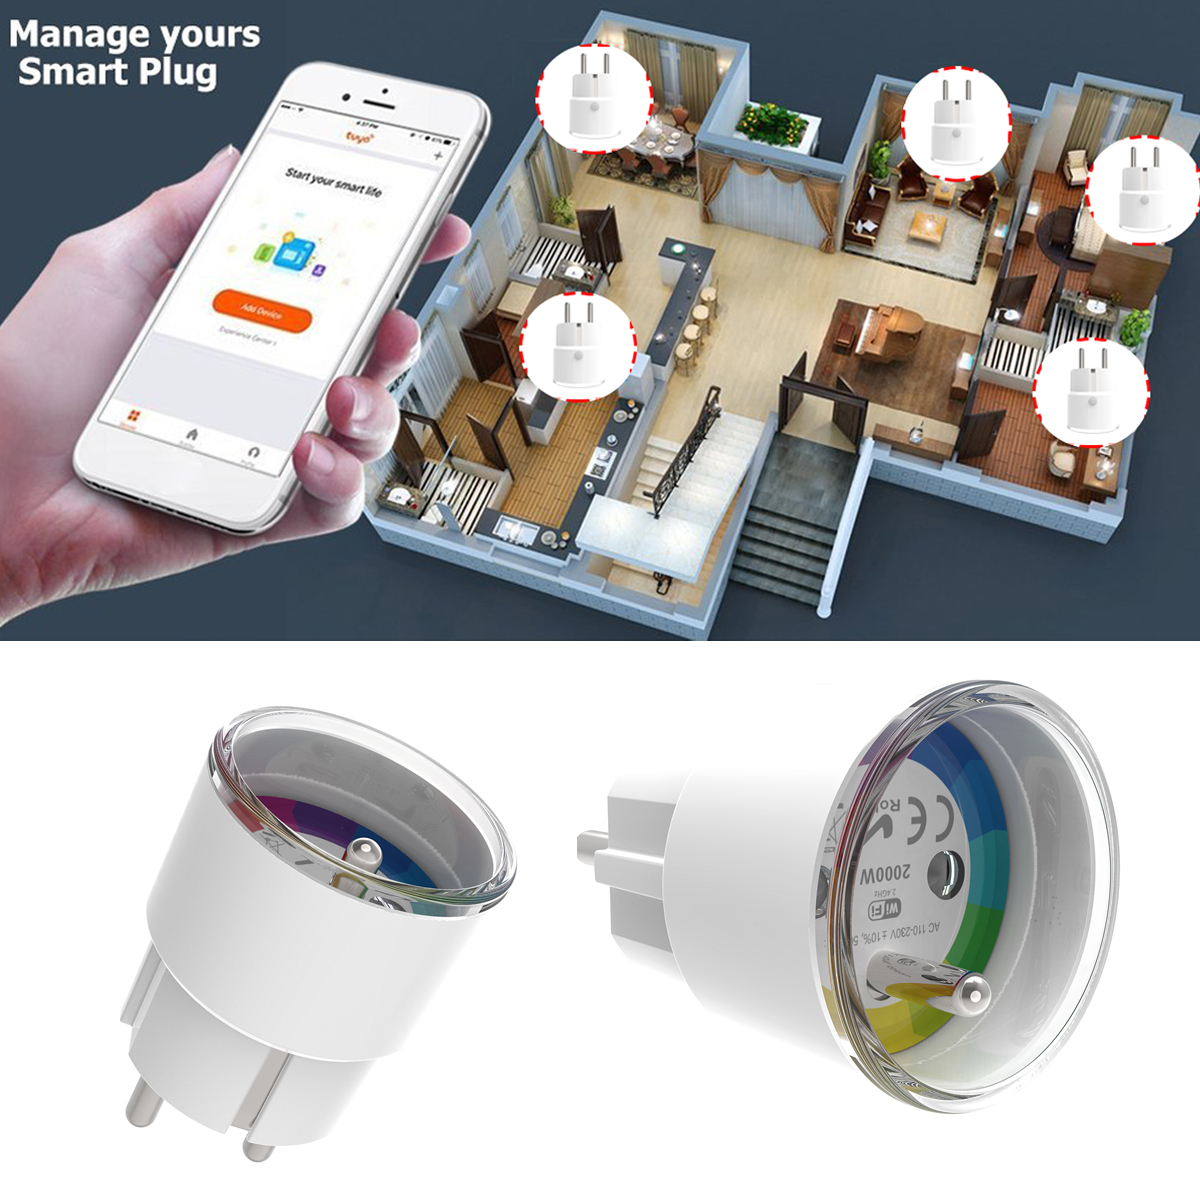 24GHz-Wifi-Smart-EU-Plug-Remote-Control-Outlet-Wireless-Home-Power-Socket-Switch-Timer-1529605-6